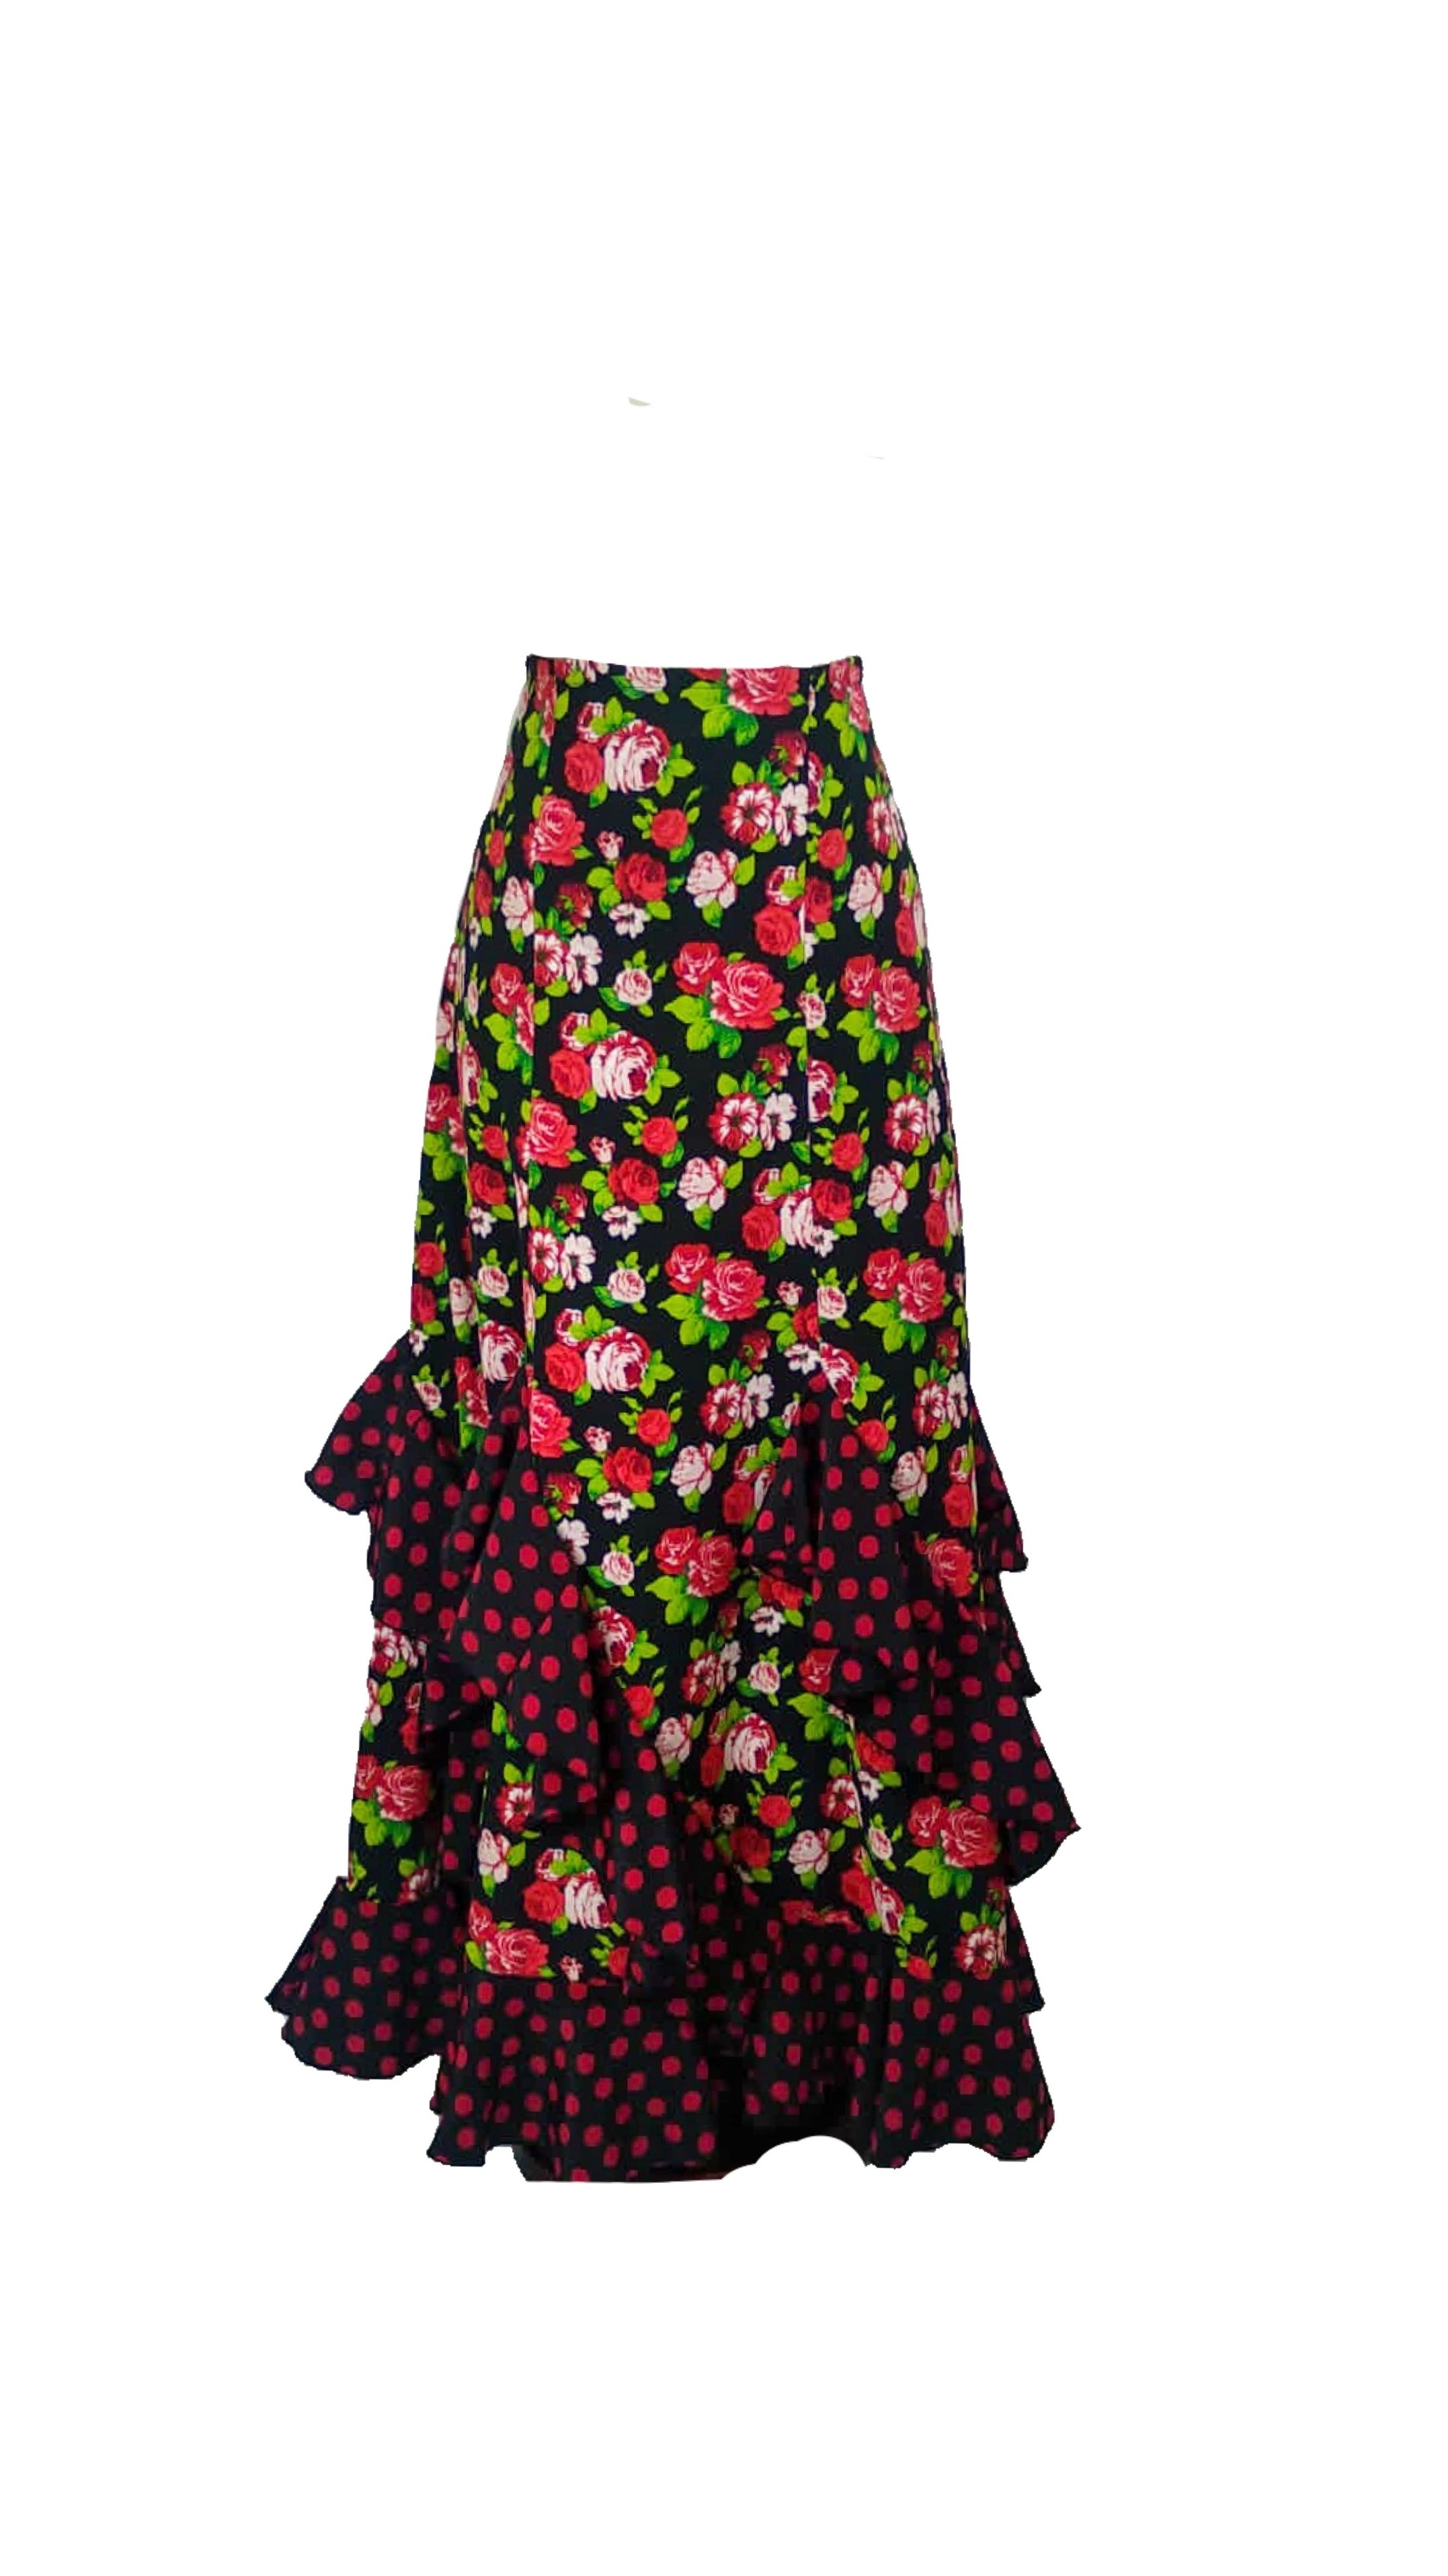 Falda flamenca Mod. Caracolas